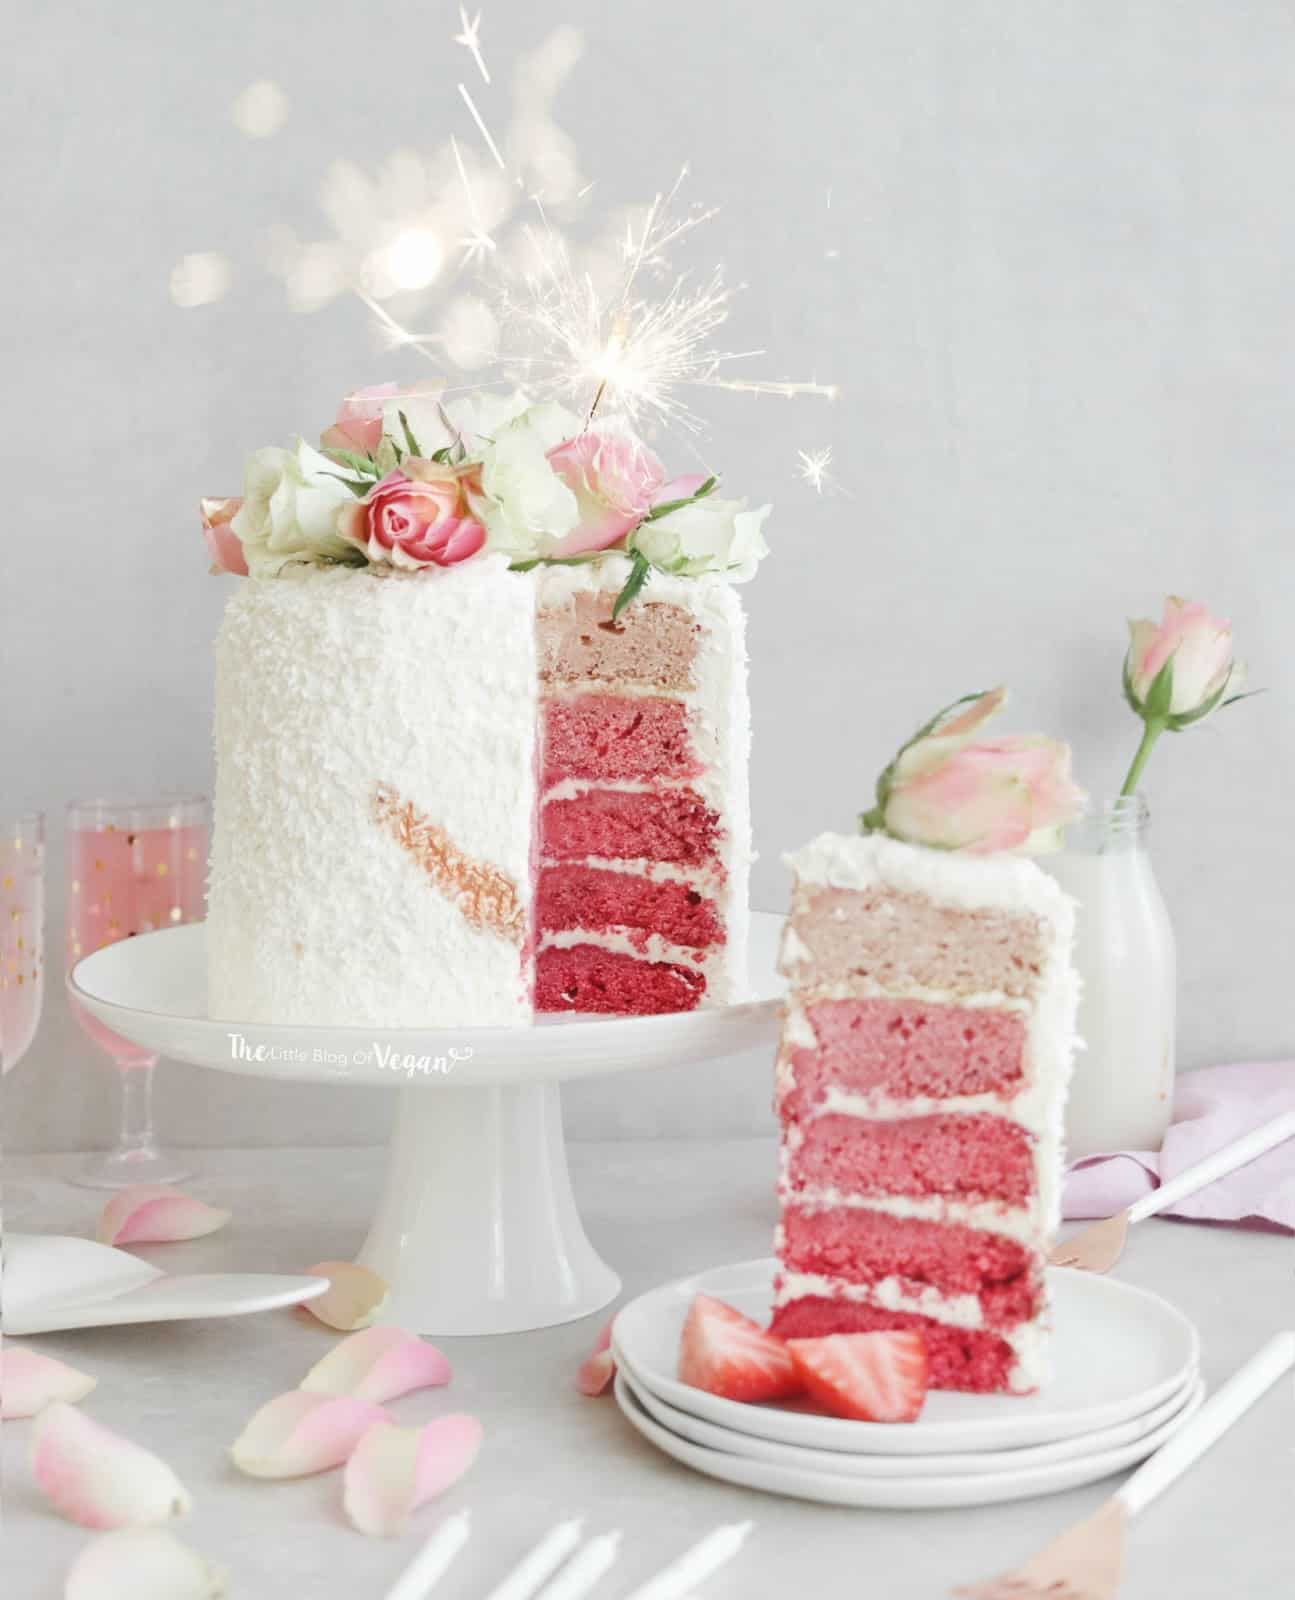 Vegan Wedding Cake Recipes